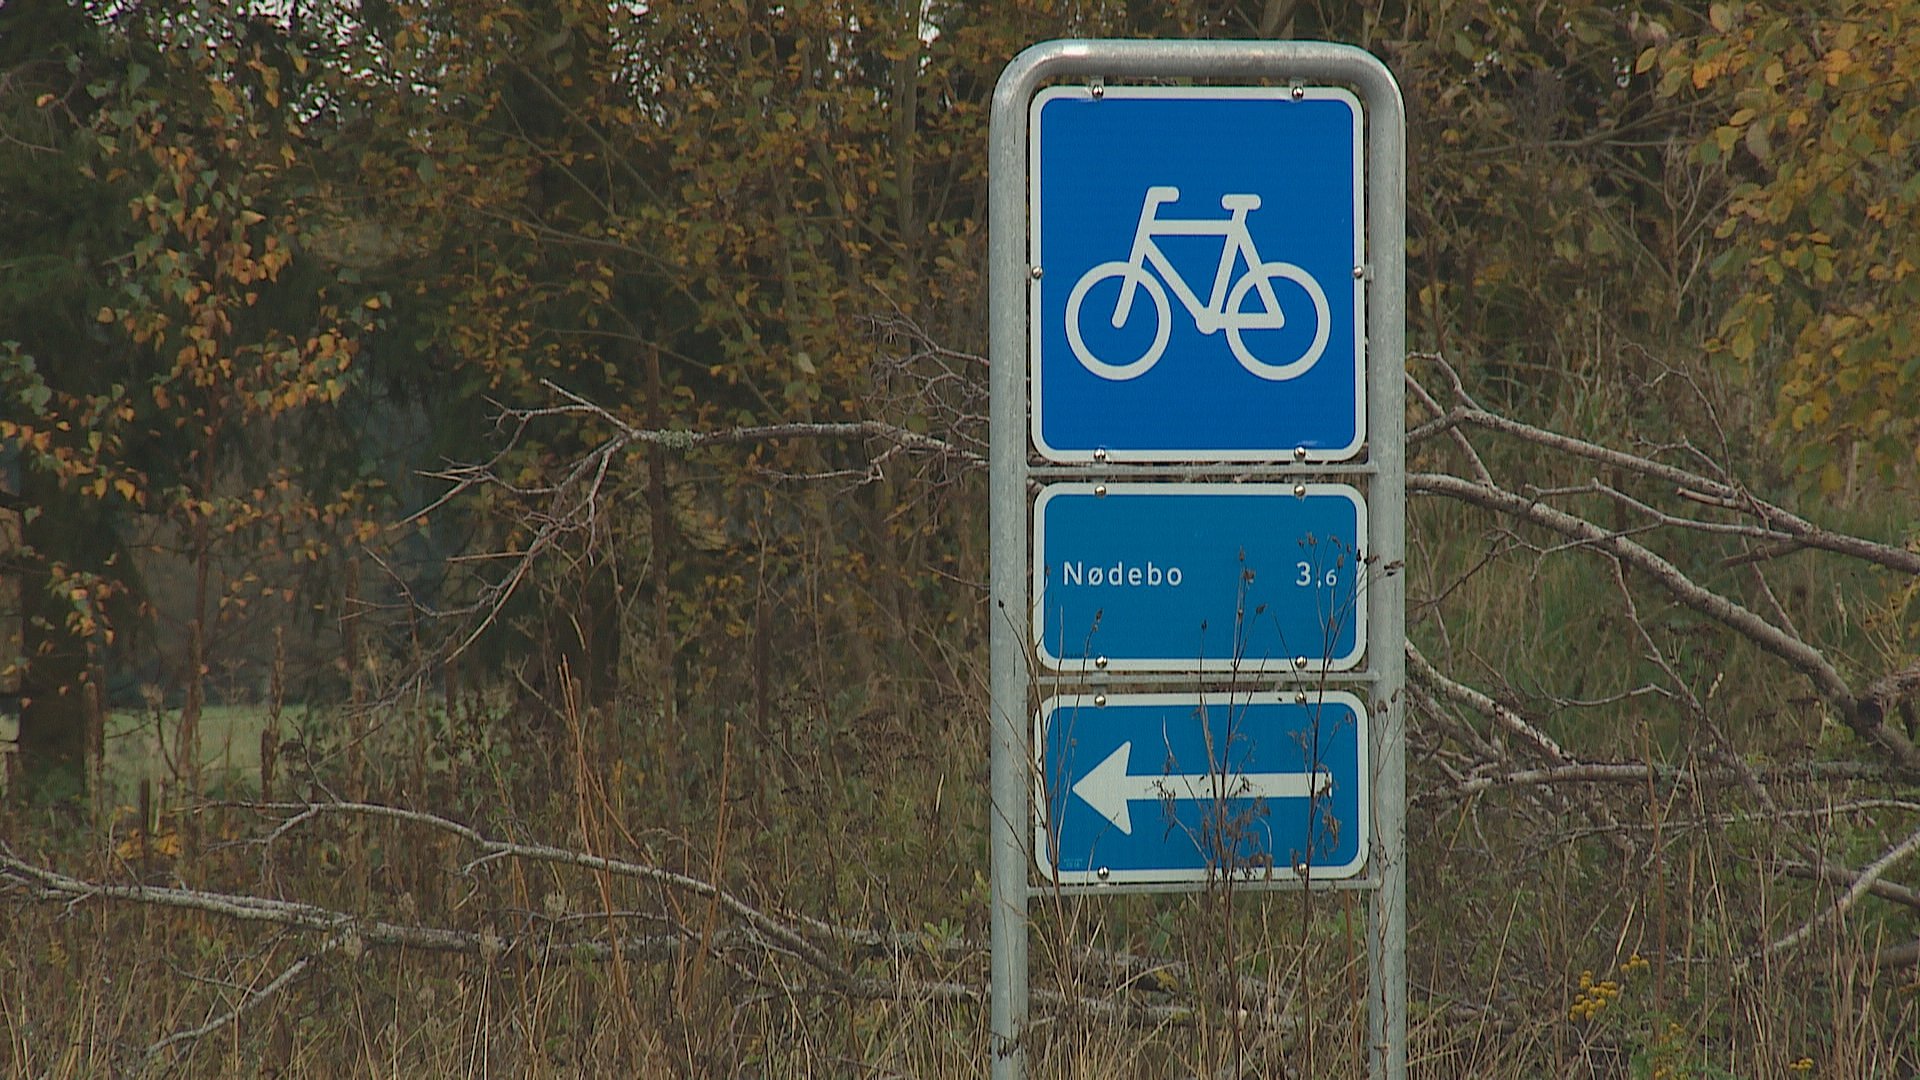 Dyr cykelsti mellem Nøddebo og Hillerød endelig på vej | TV 2